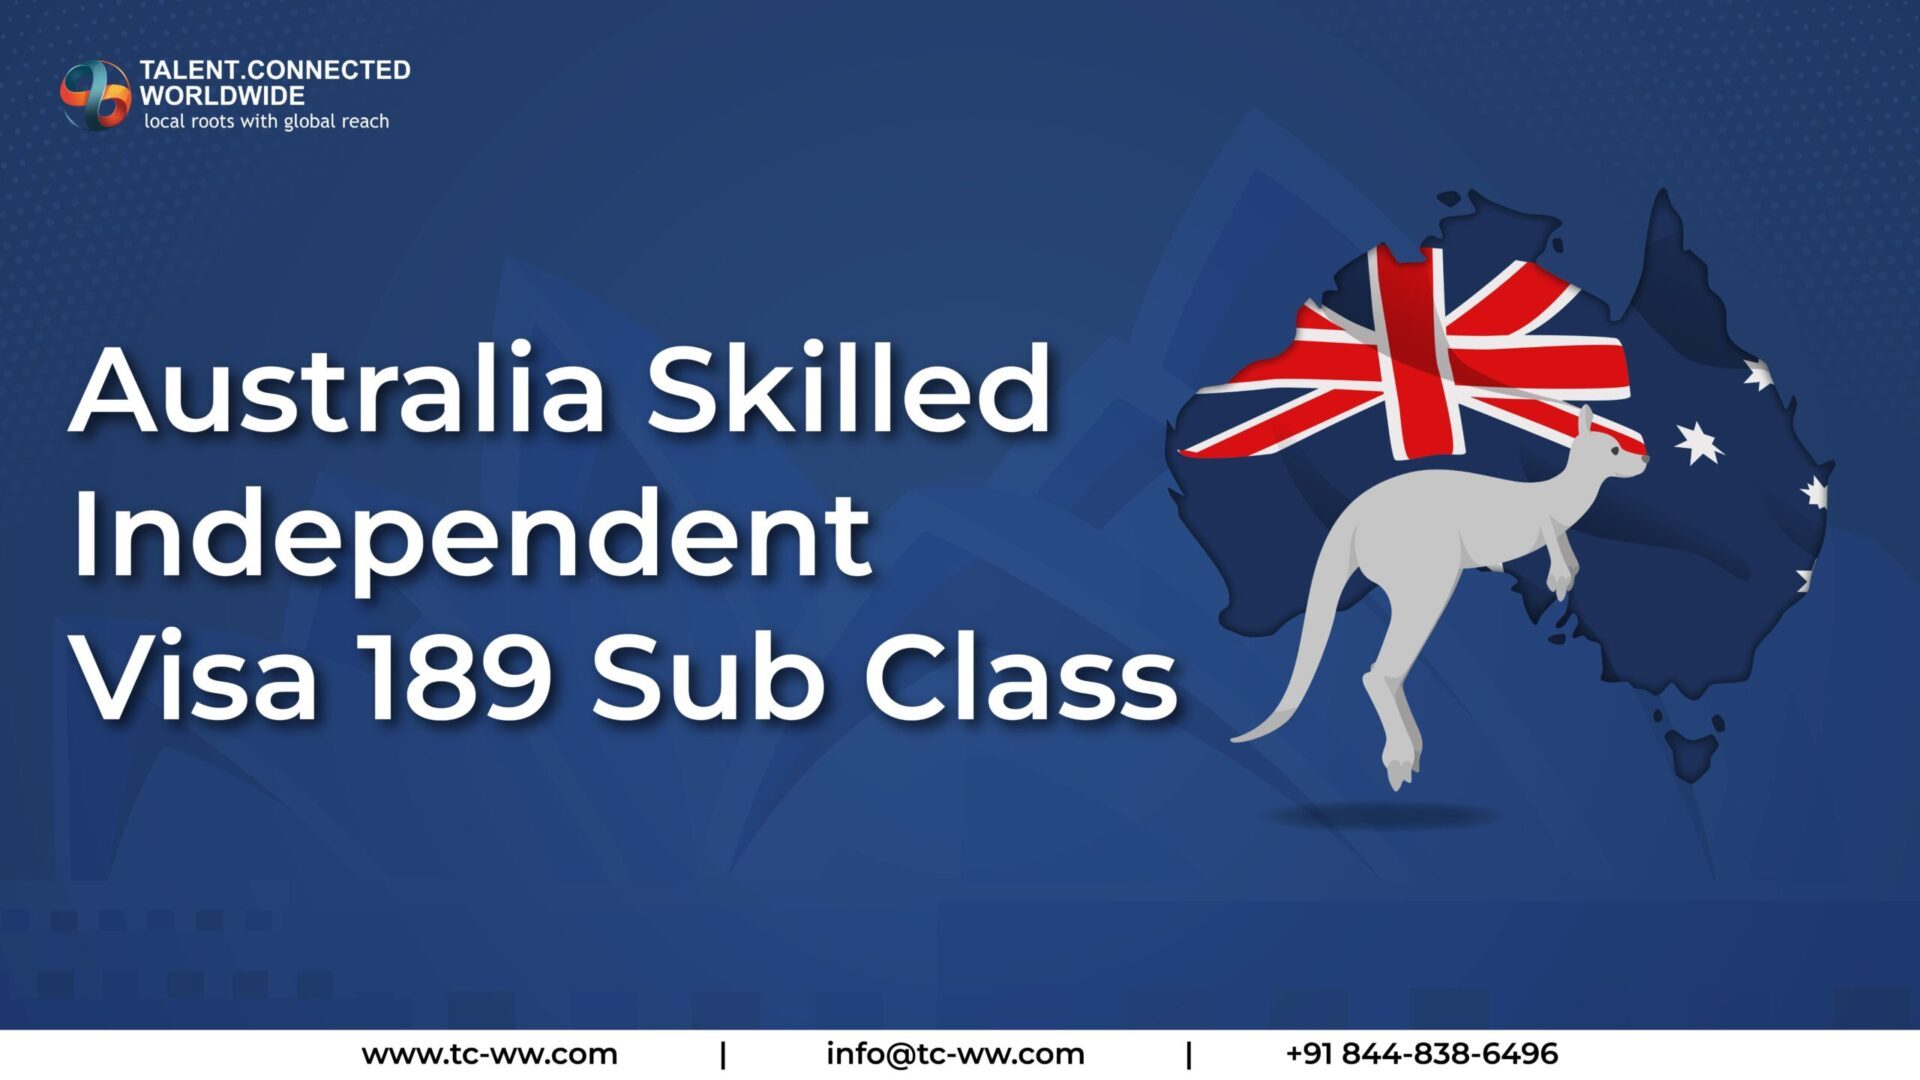 Australia Skilled Independent Visa 189 Sub Class